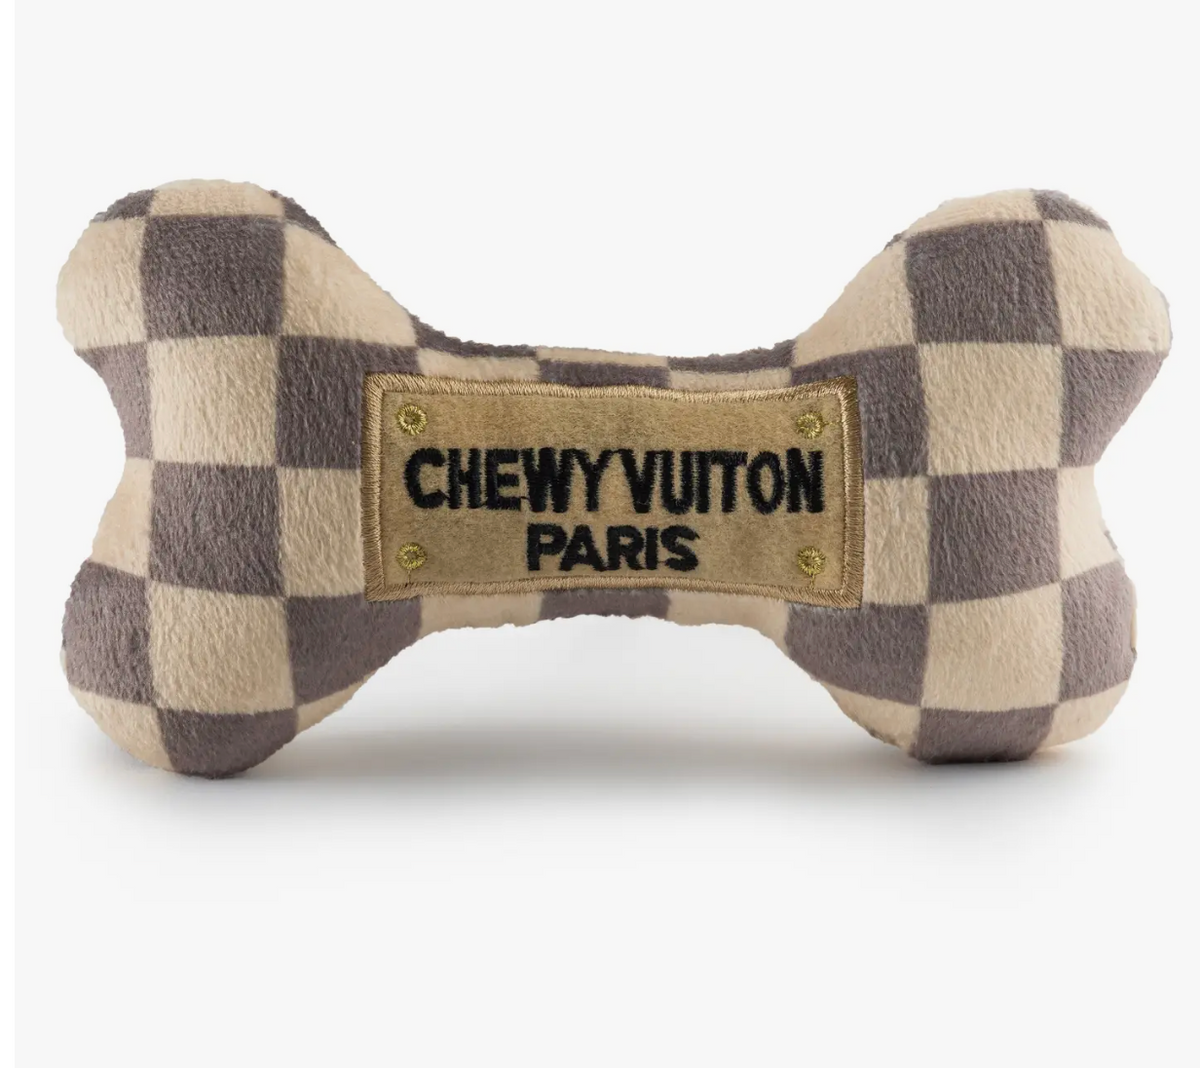 Checker Chewy Vuiton Bones Squeaker Dog Toy